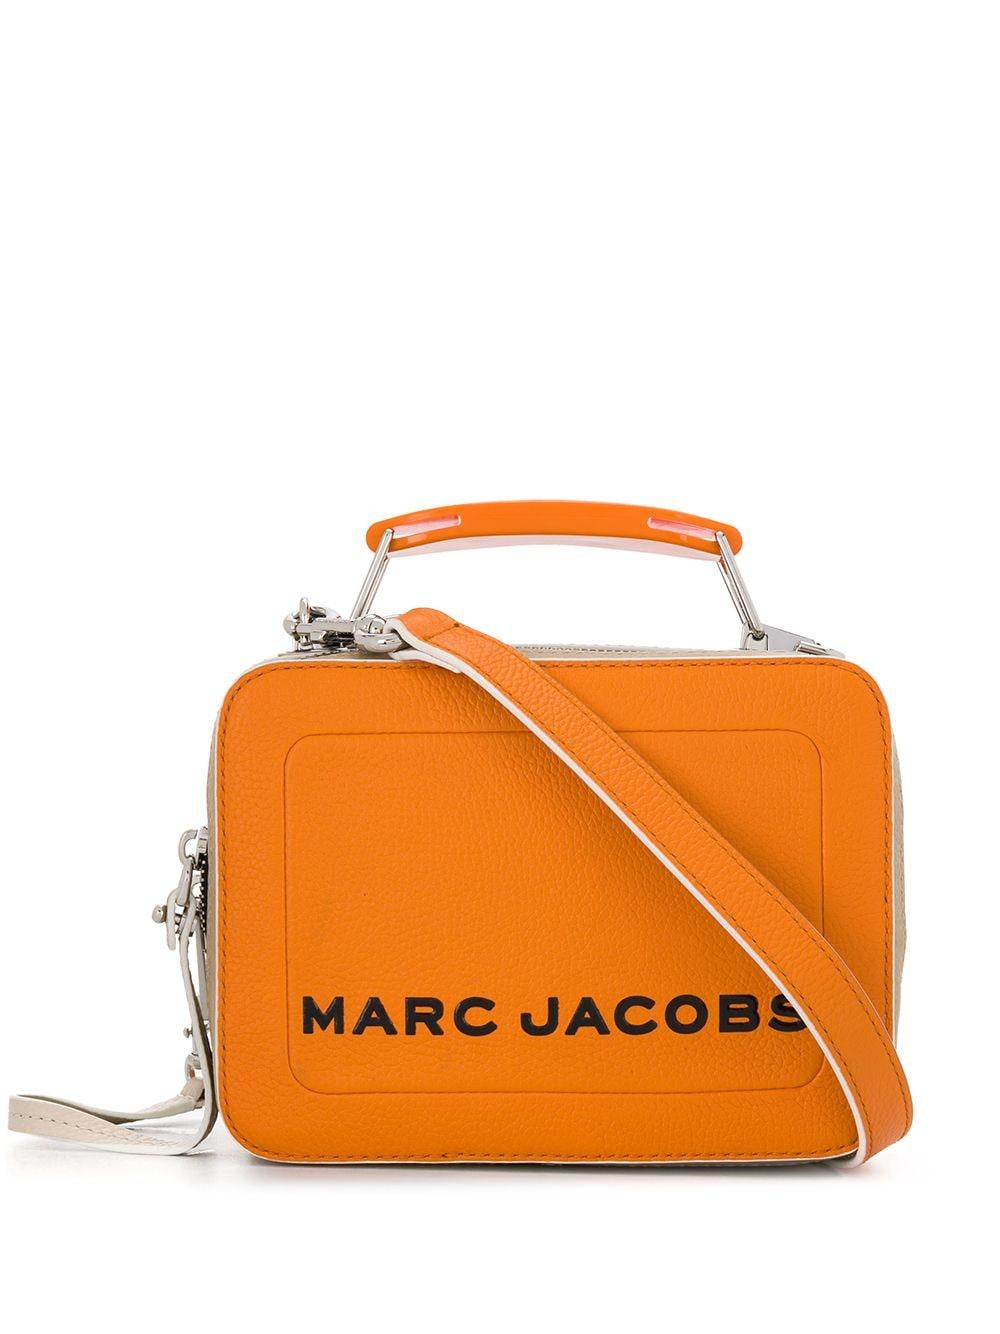 Marc Jacobs Authenticated The Box Bag Handbag